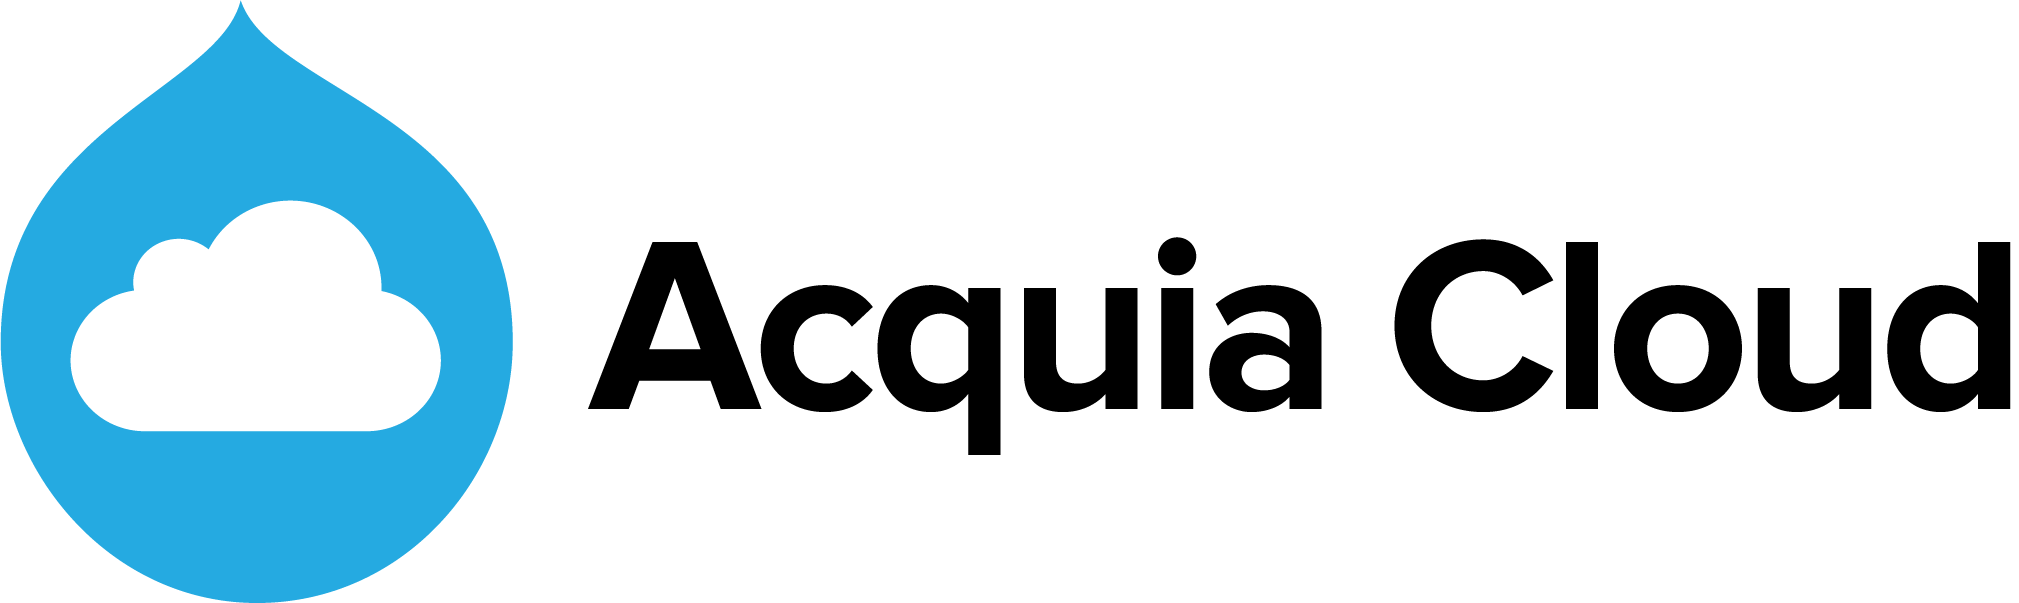 Acquia Logo - Acquia Cloud